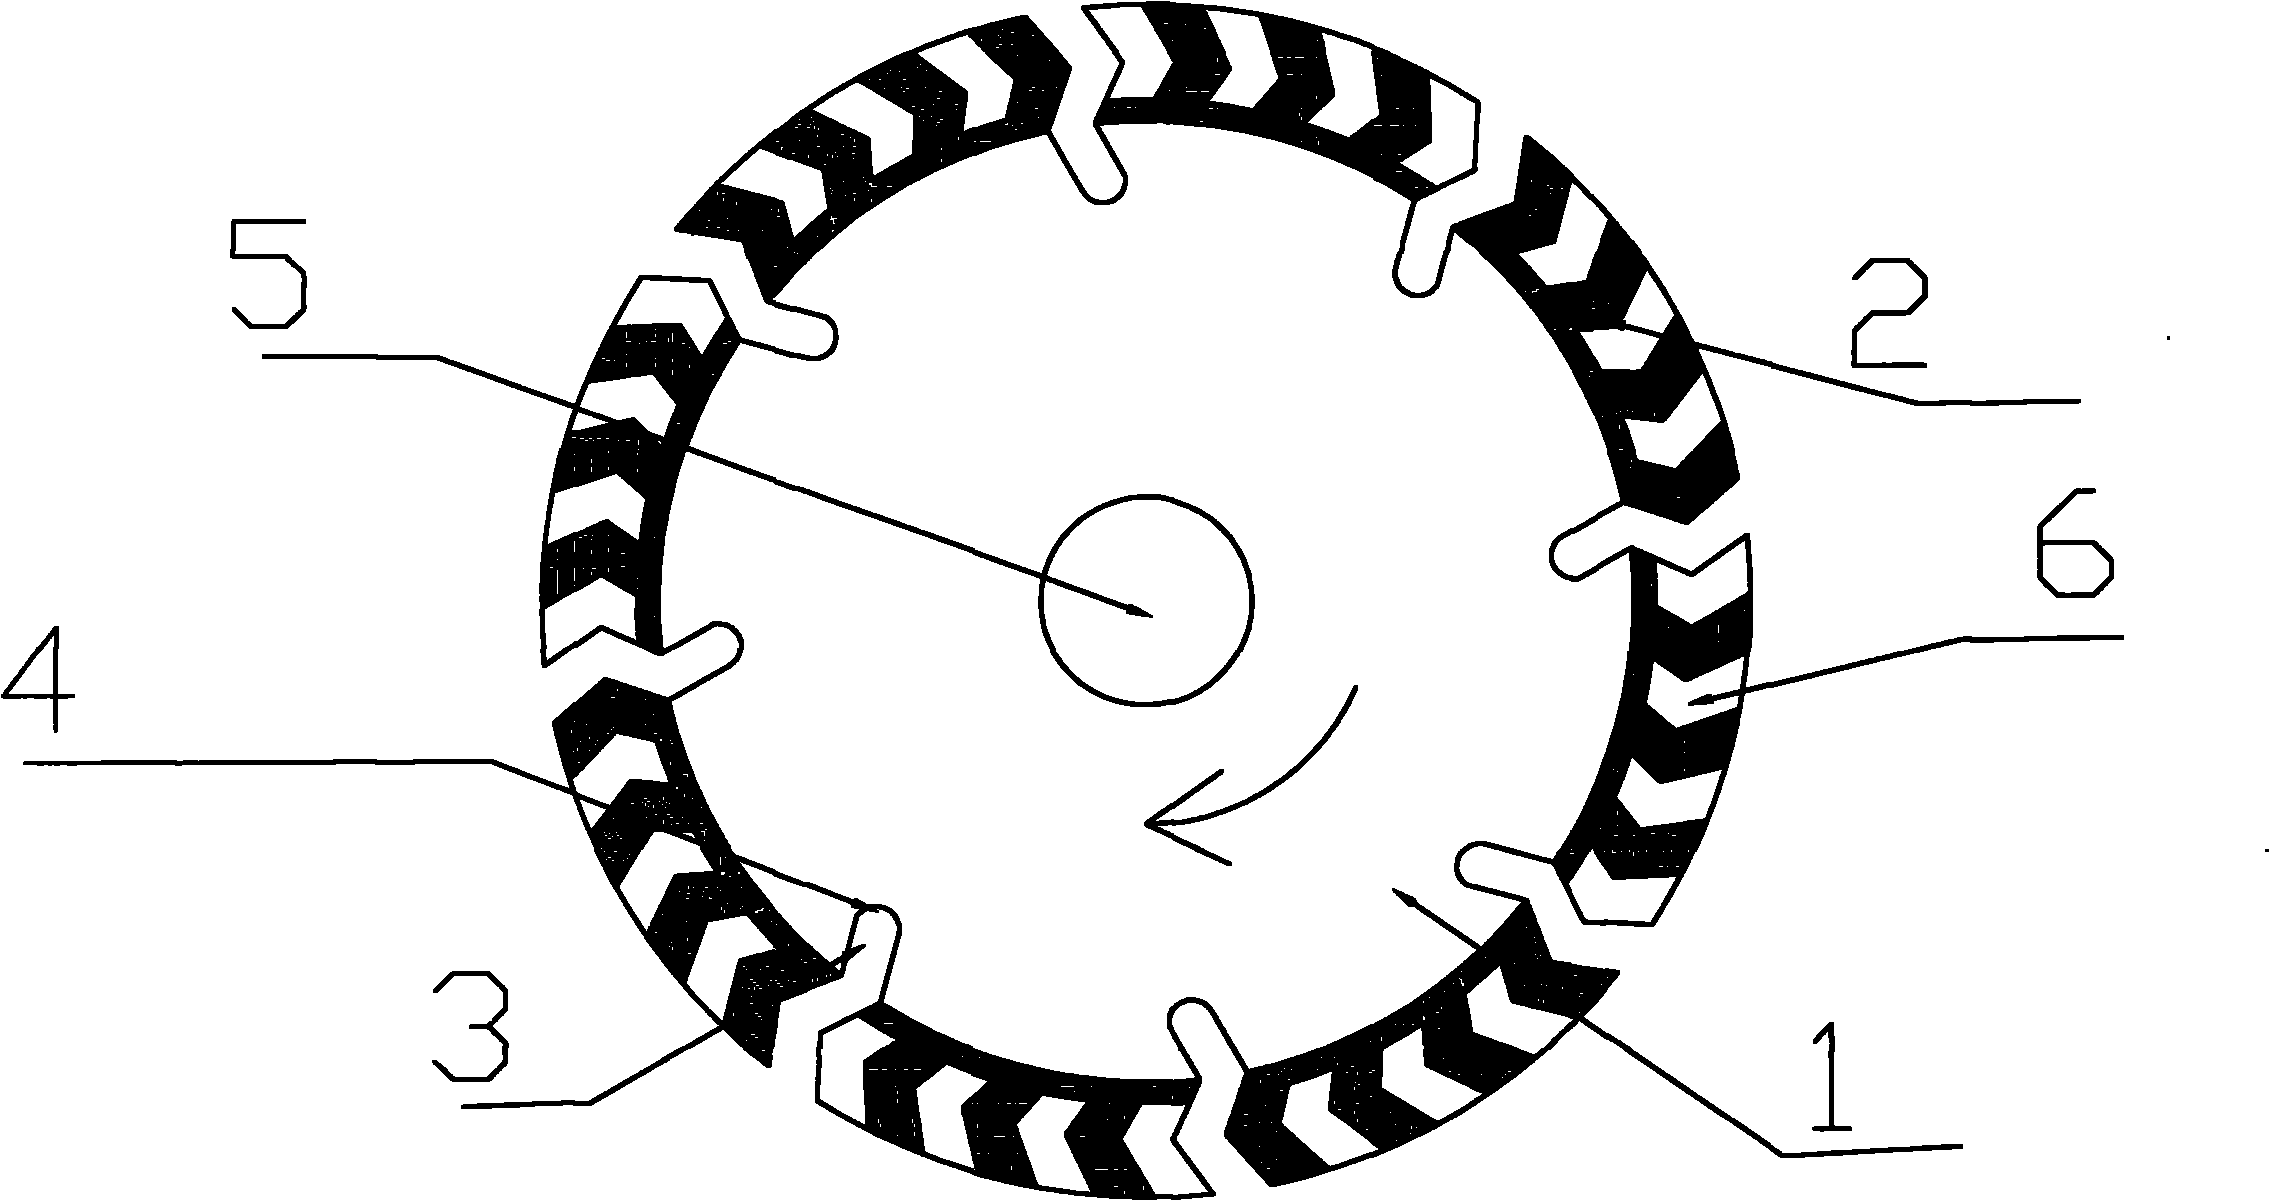 Diamond circular saw blade with nock-type tool bits